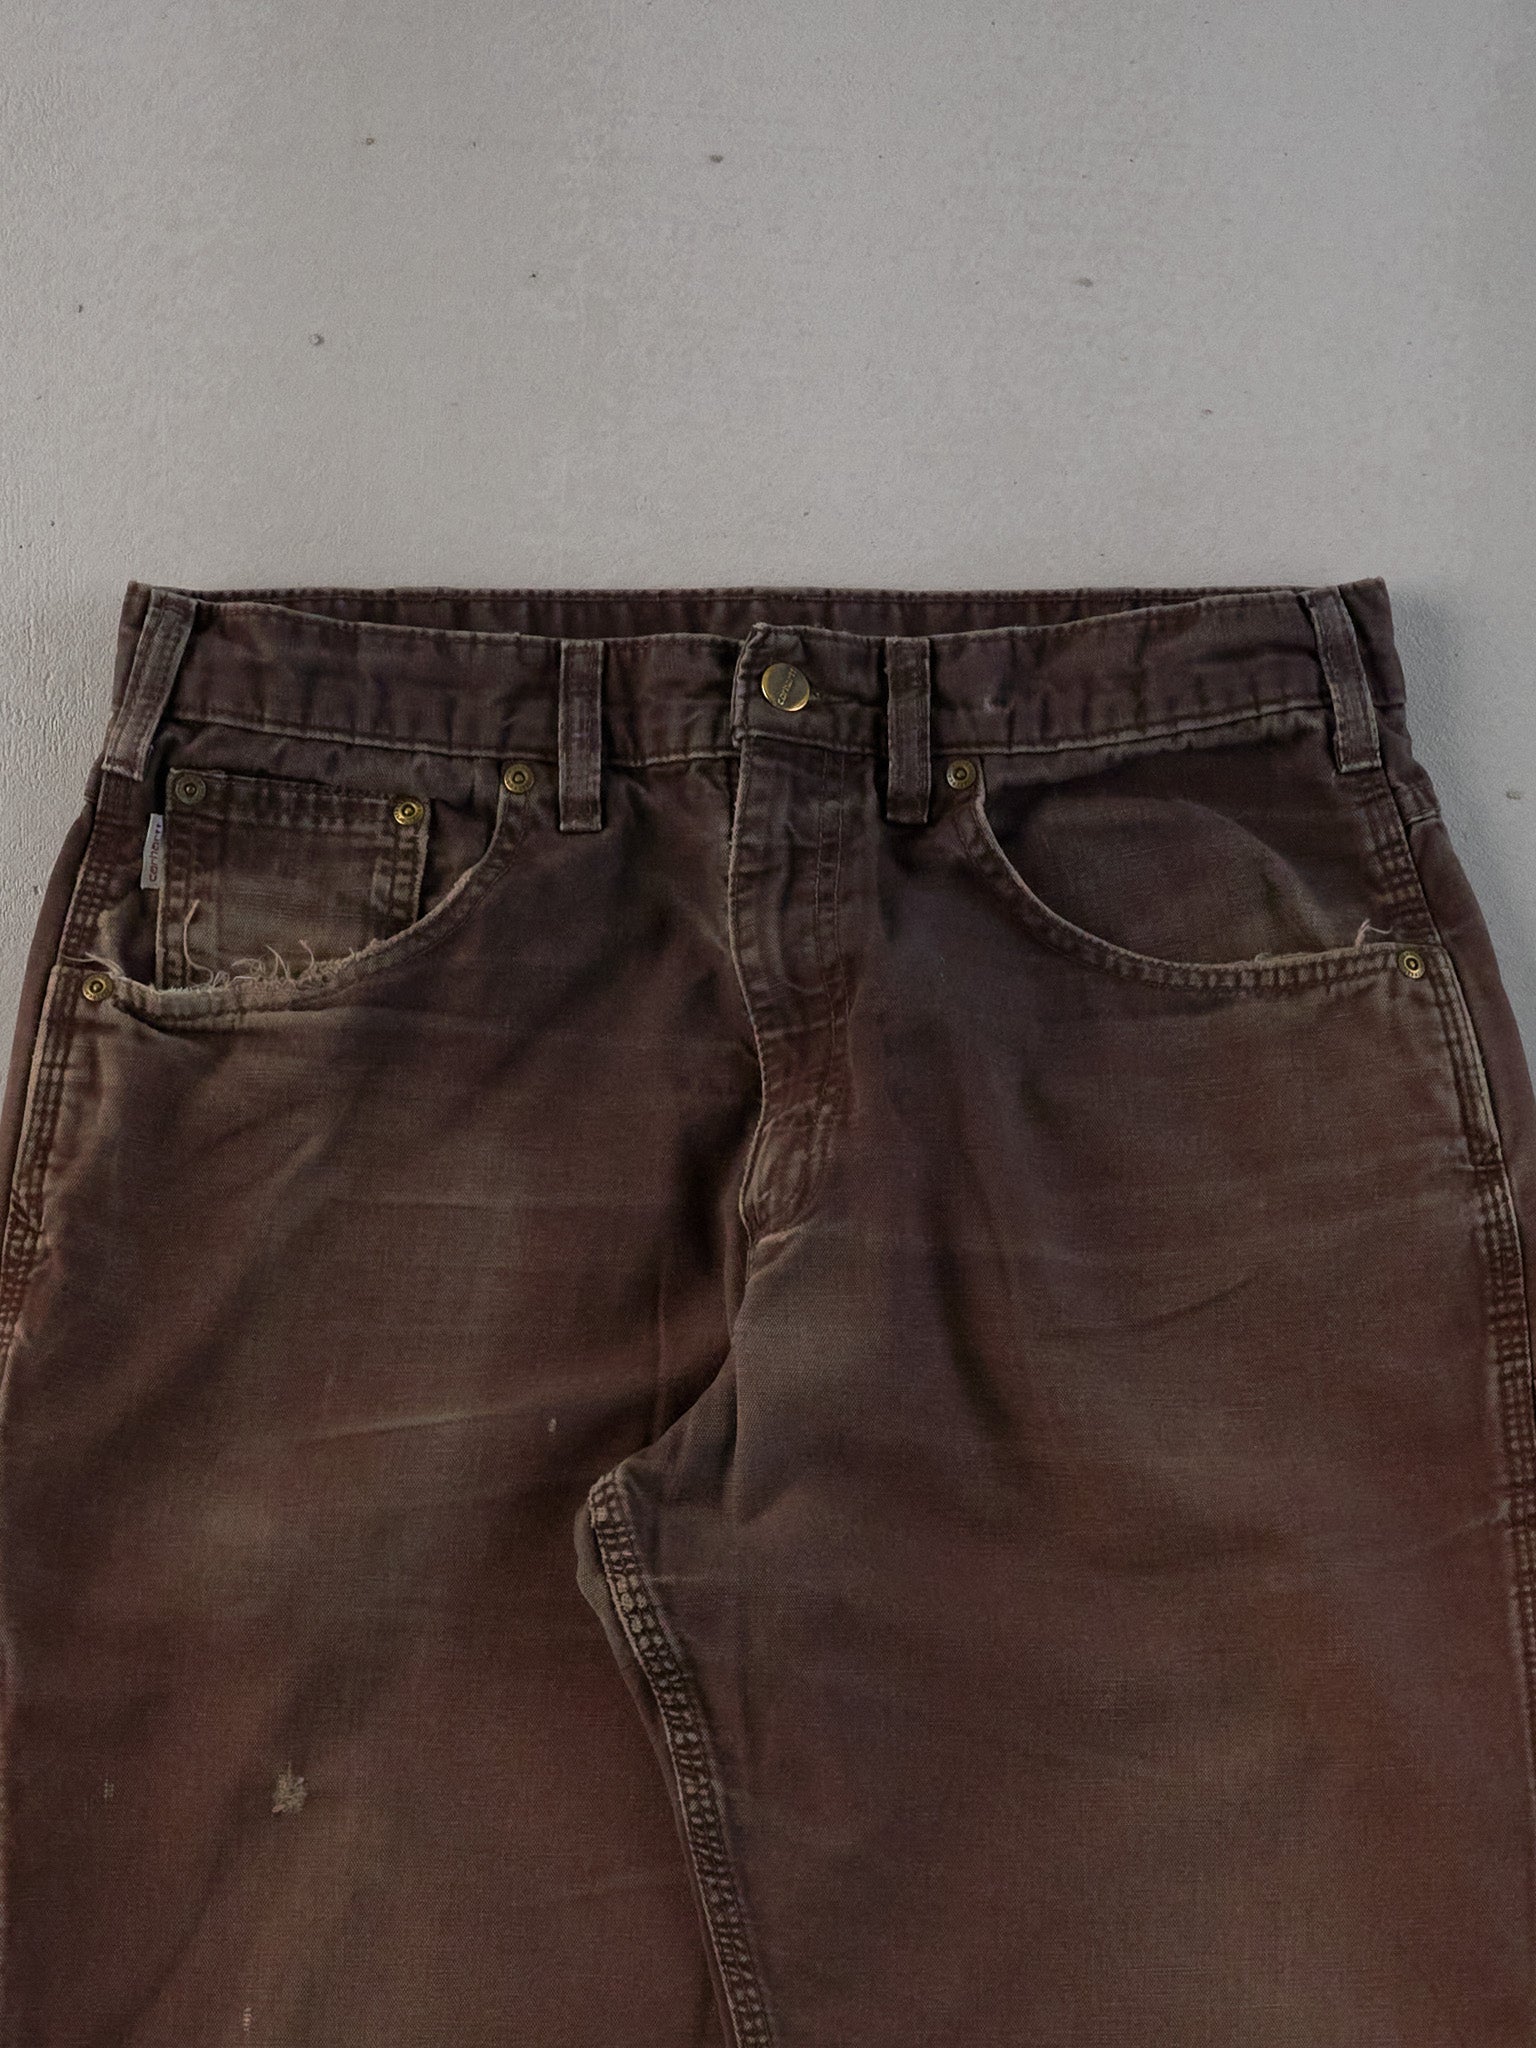 Vintage 90s Brown Carhartt Dungeree Carpenter Pants (32x28)